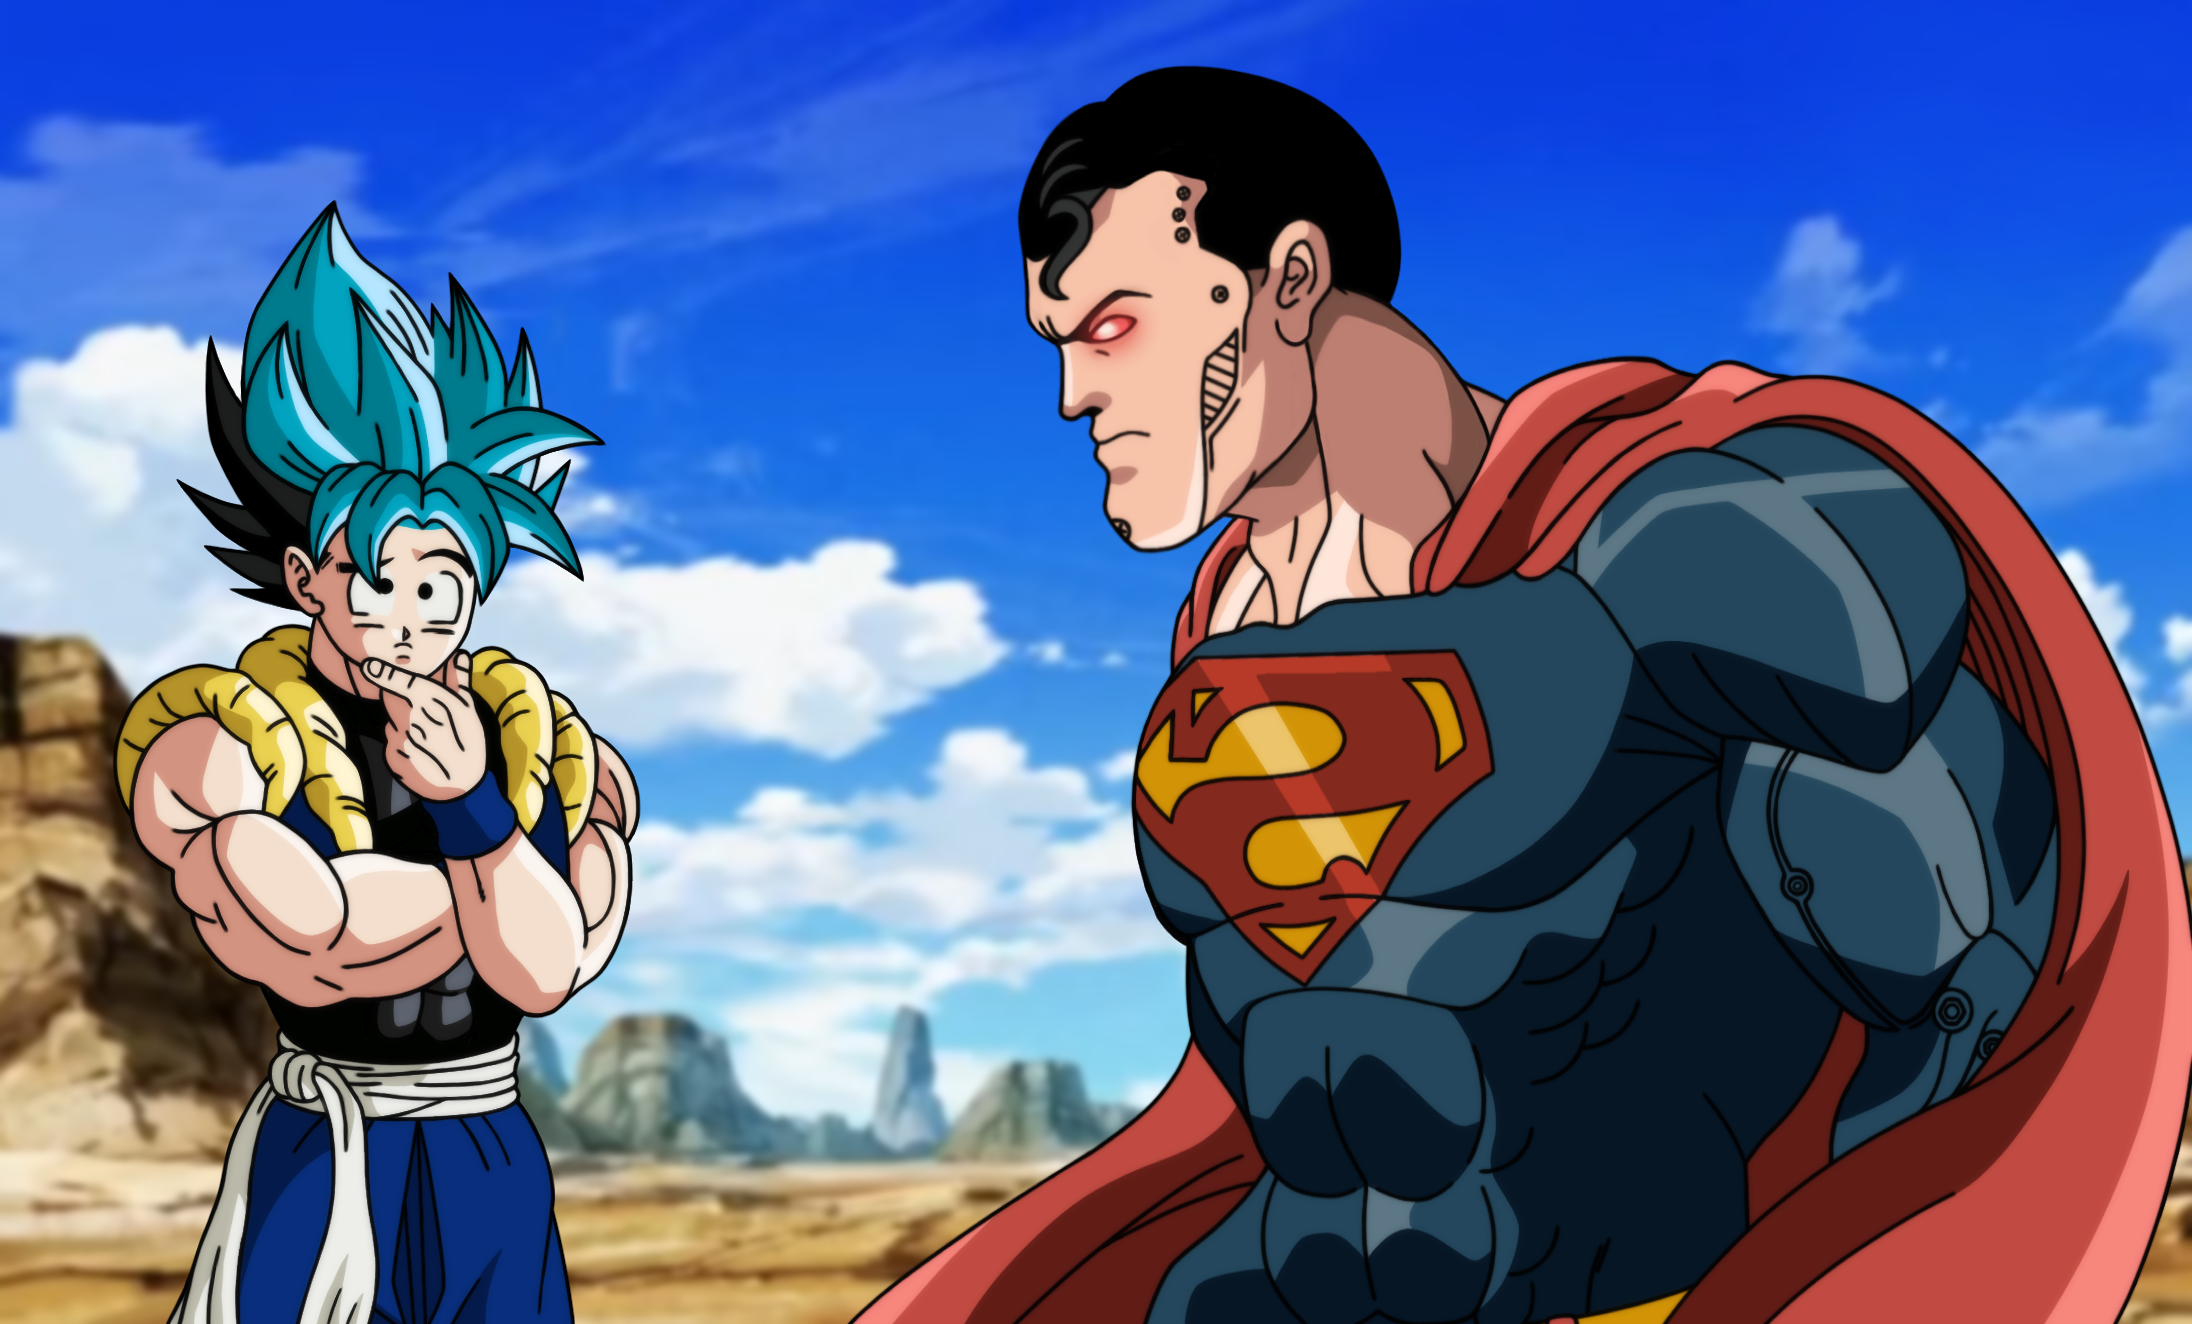 God Fusion Goku vs Cosmic Armor Superman by The-Radger457 on DeviantArt